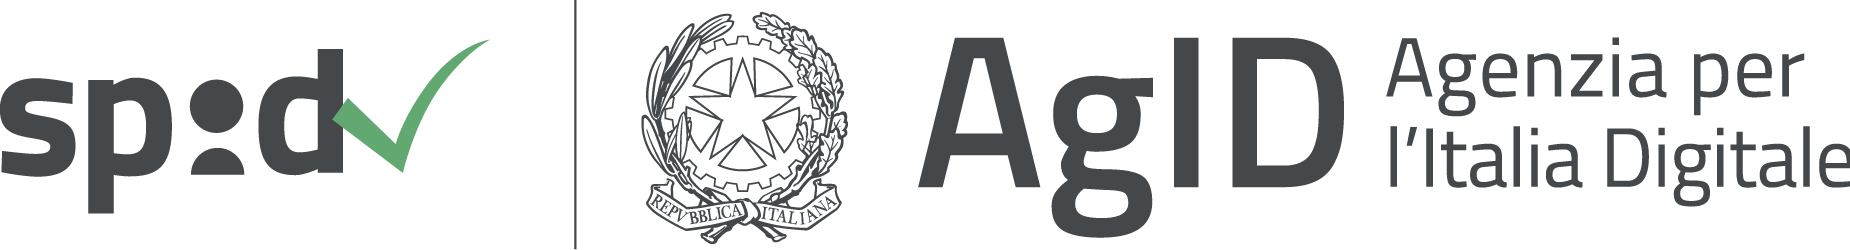 Spid Logo Agid